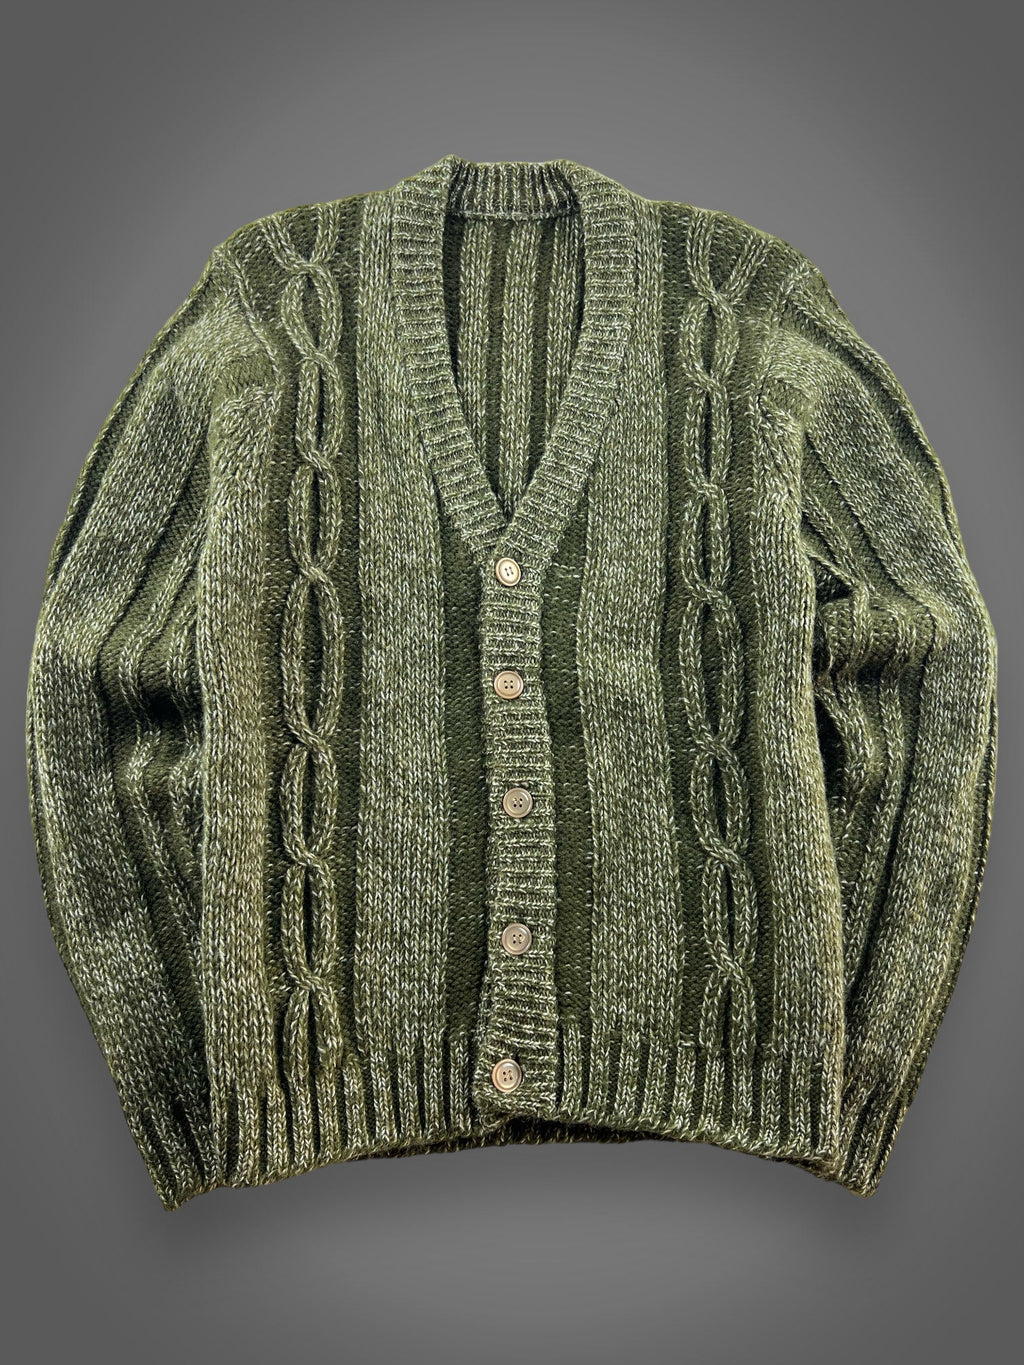 Wool cardigan sweater fits S